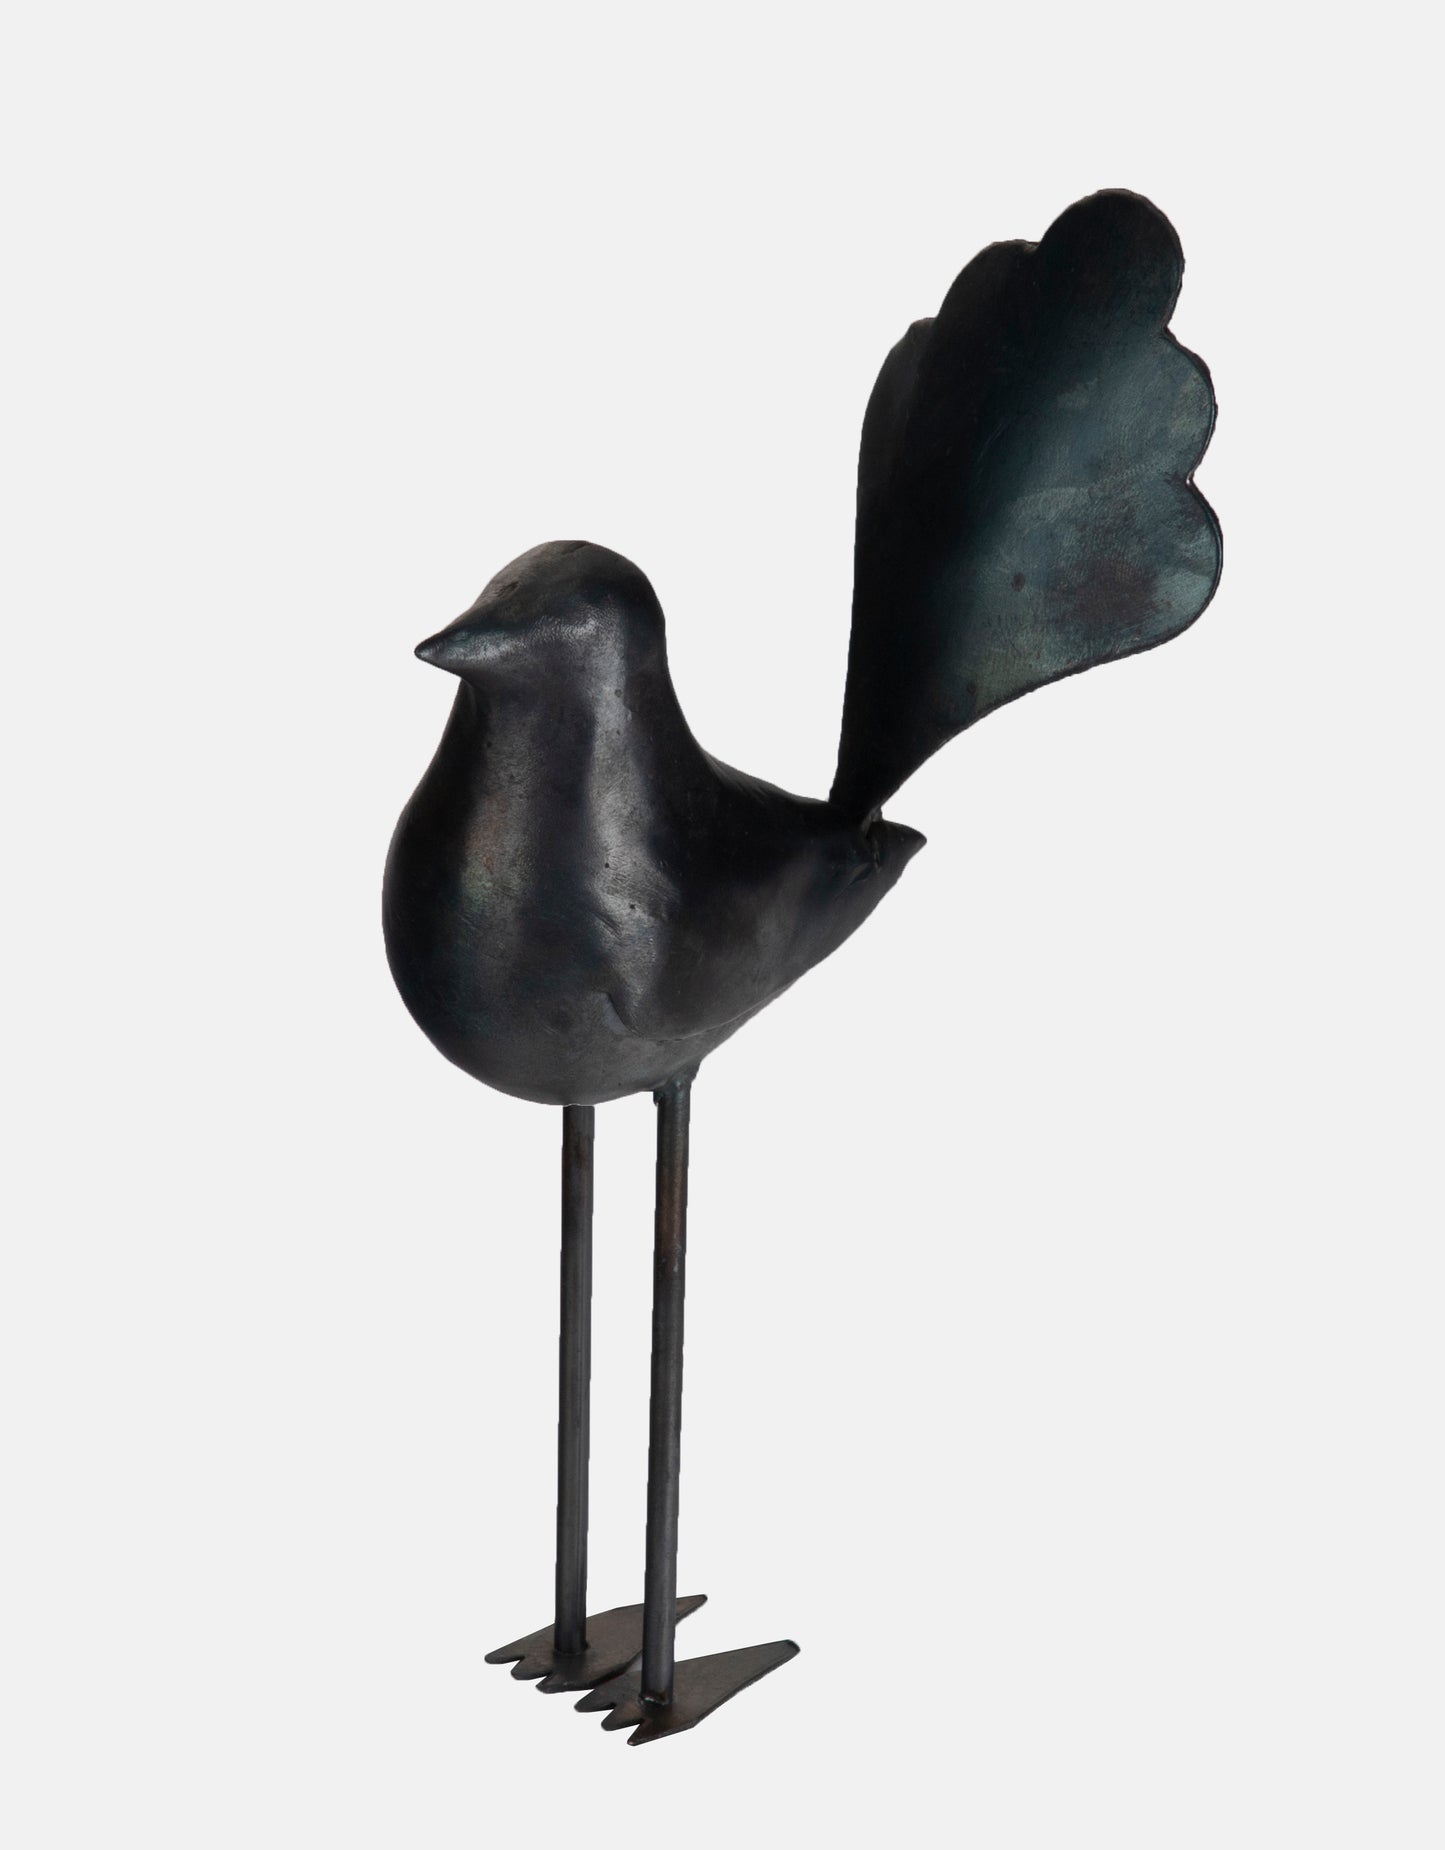 Tall Metal Bird with High Tail